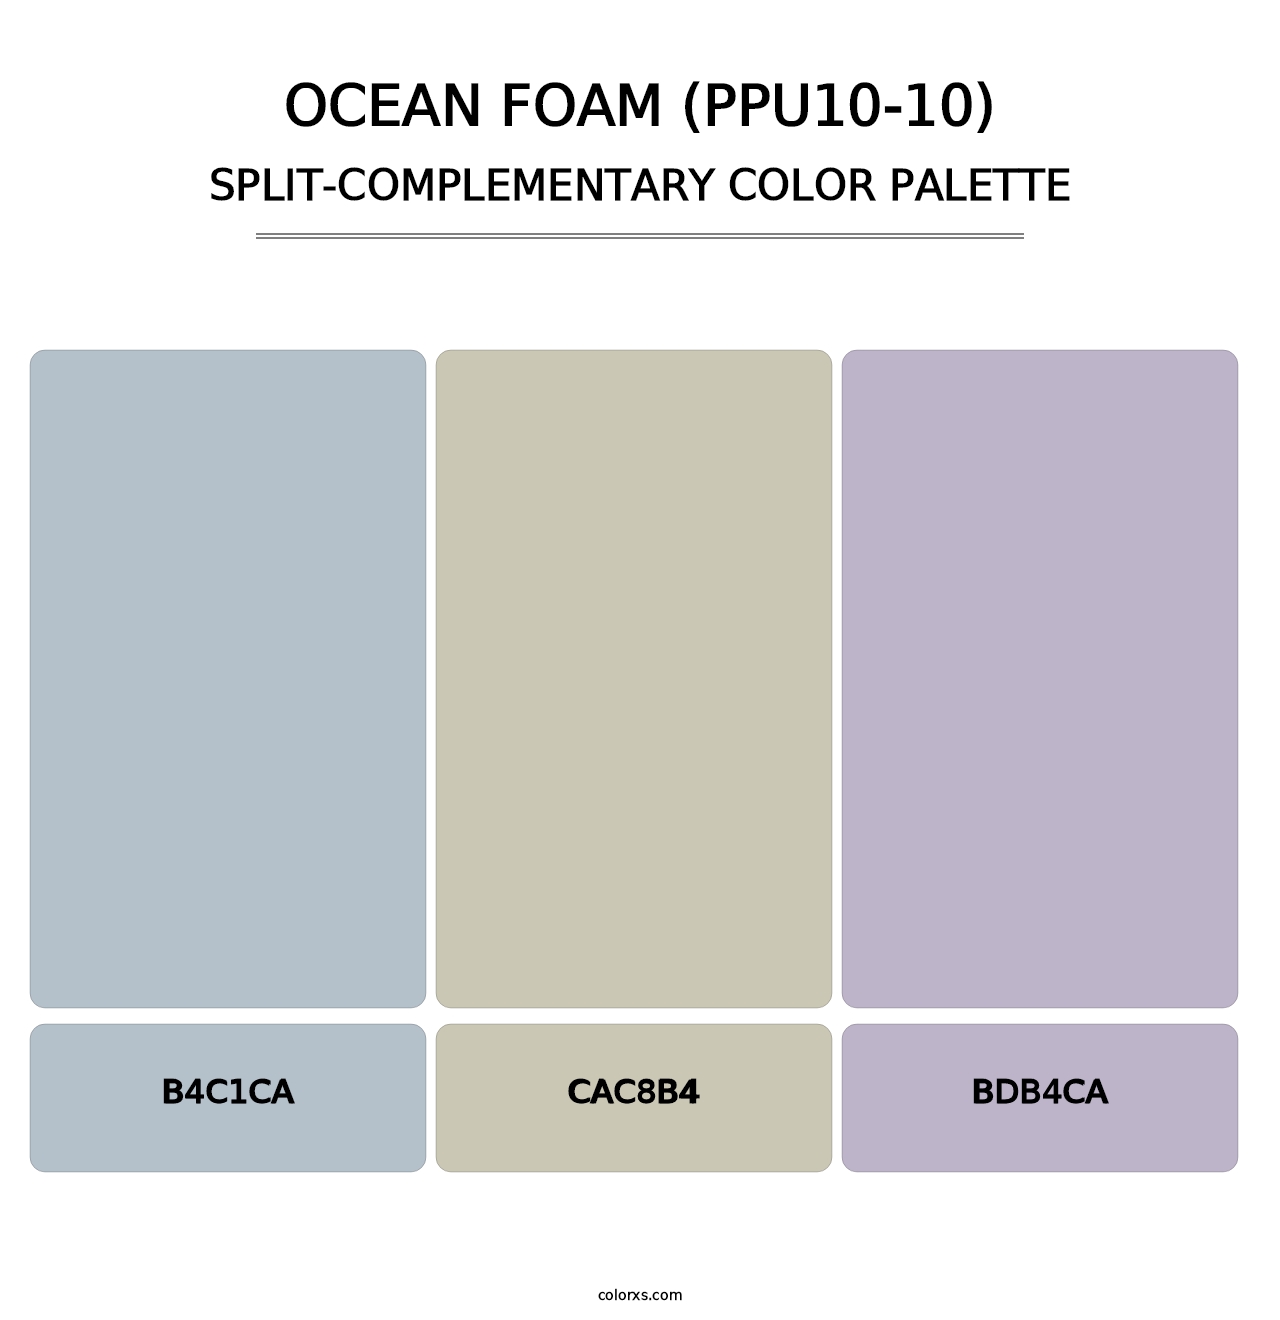 Ocean Foam (PPU10-10) - Split-Complementary Color Palette